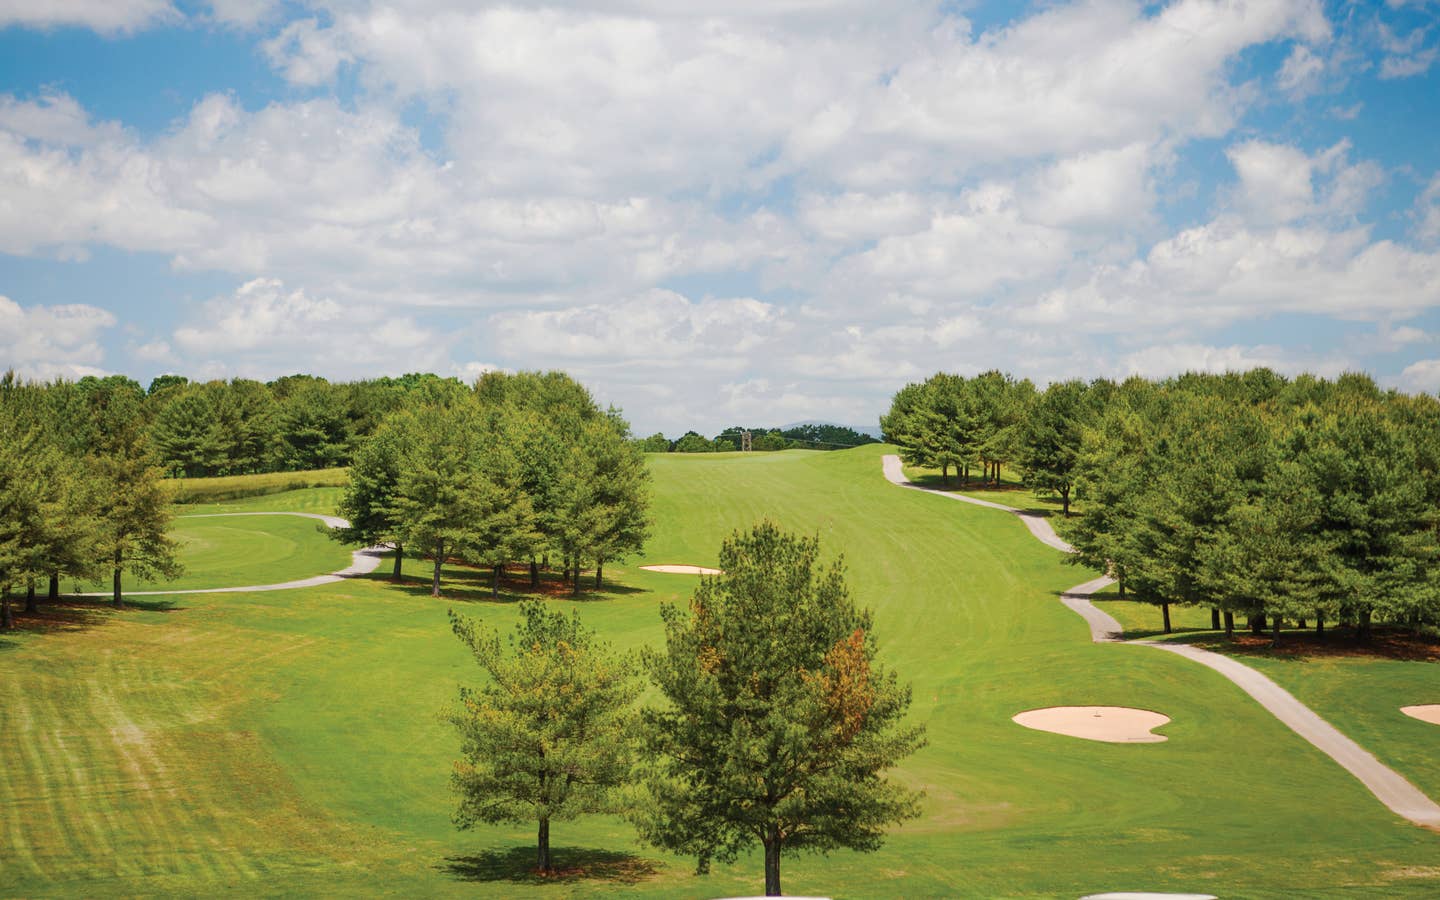 Golf course at Apple Mountain Resort in Clarkesville, GA